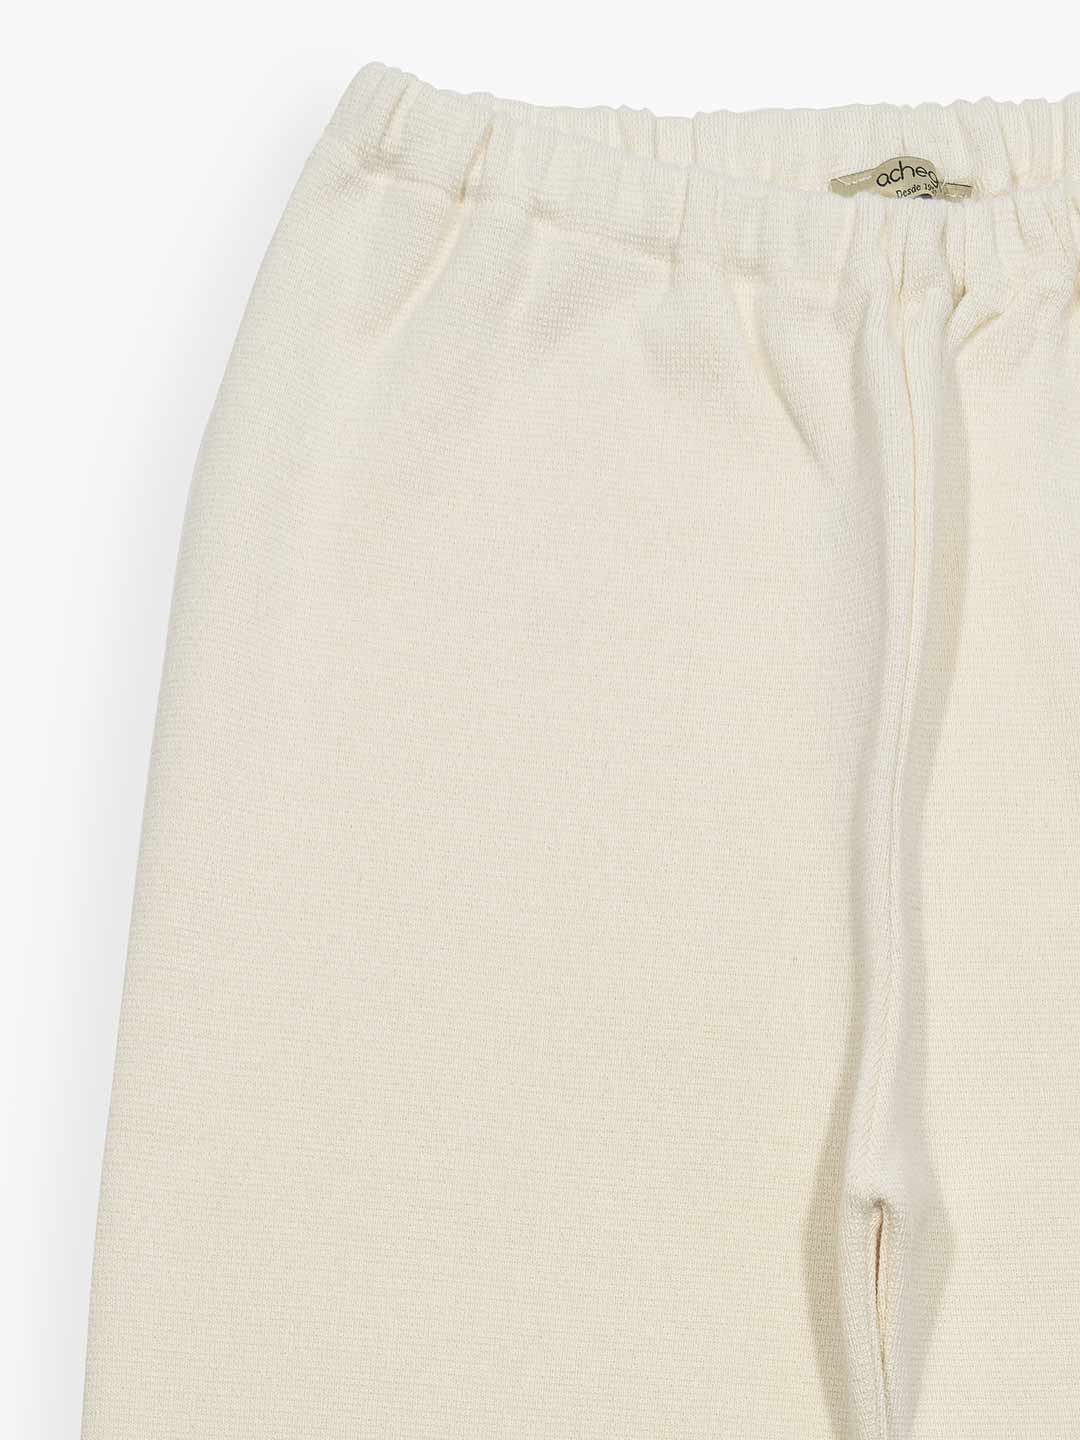 Plain Pants with Elastic Waist in Merino Wool